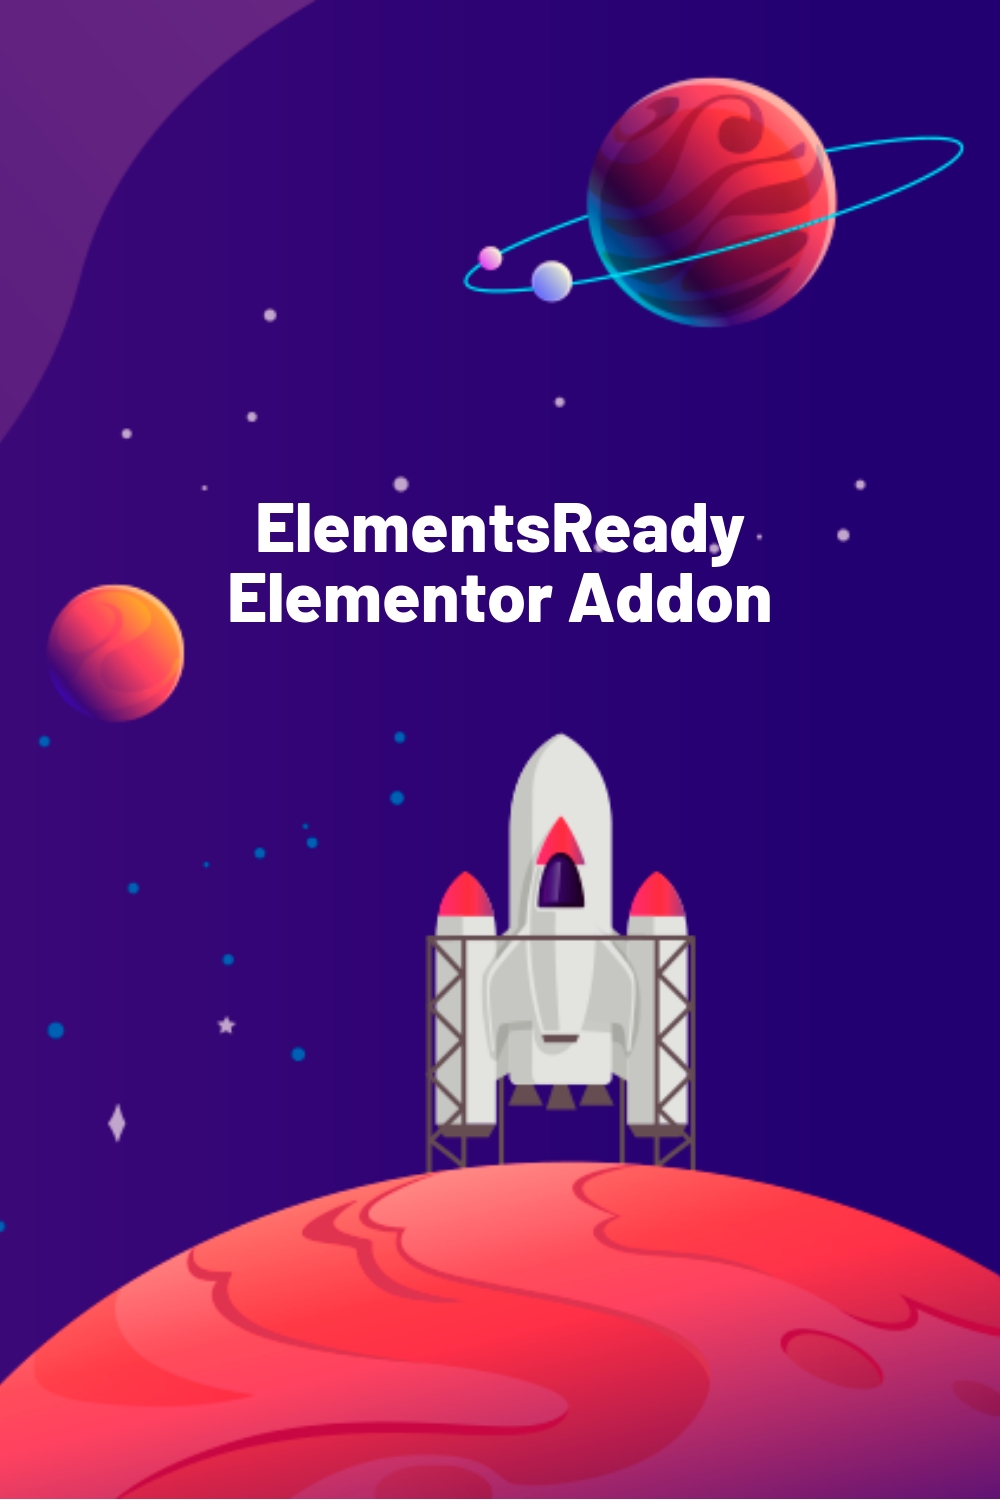 ElementsReady Elementor Addon